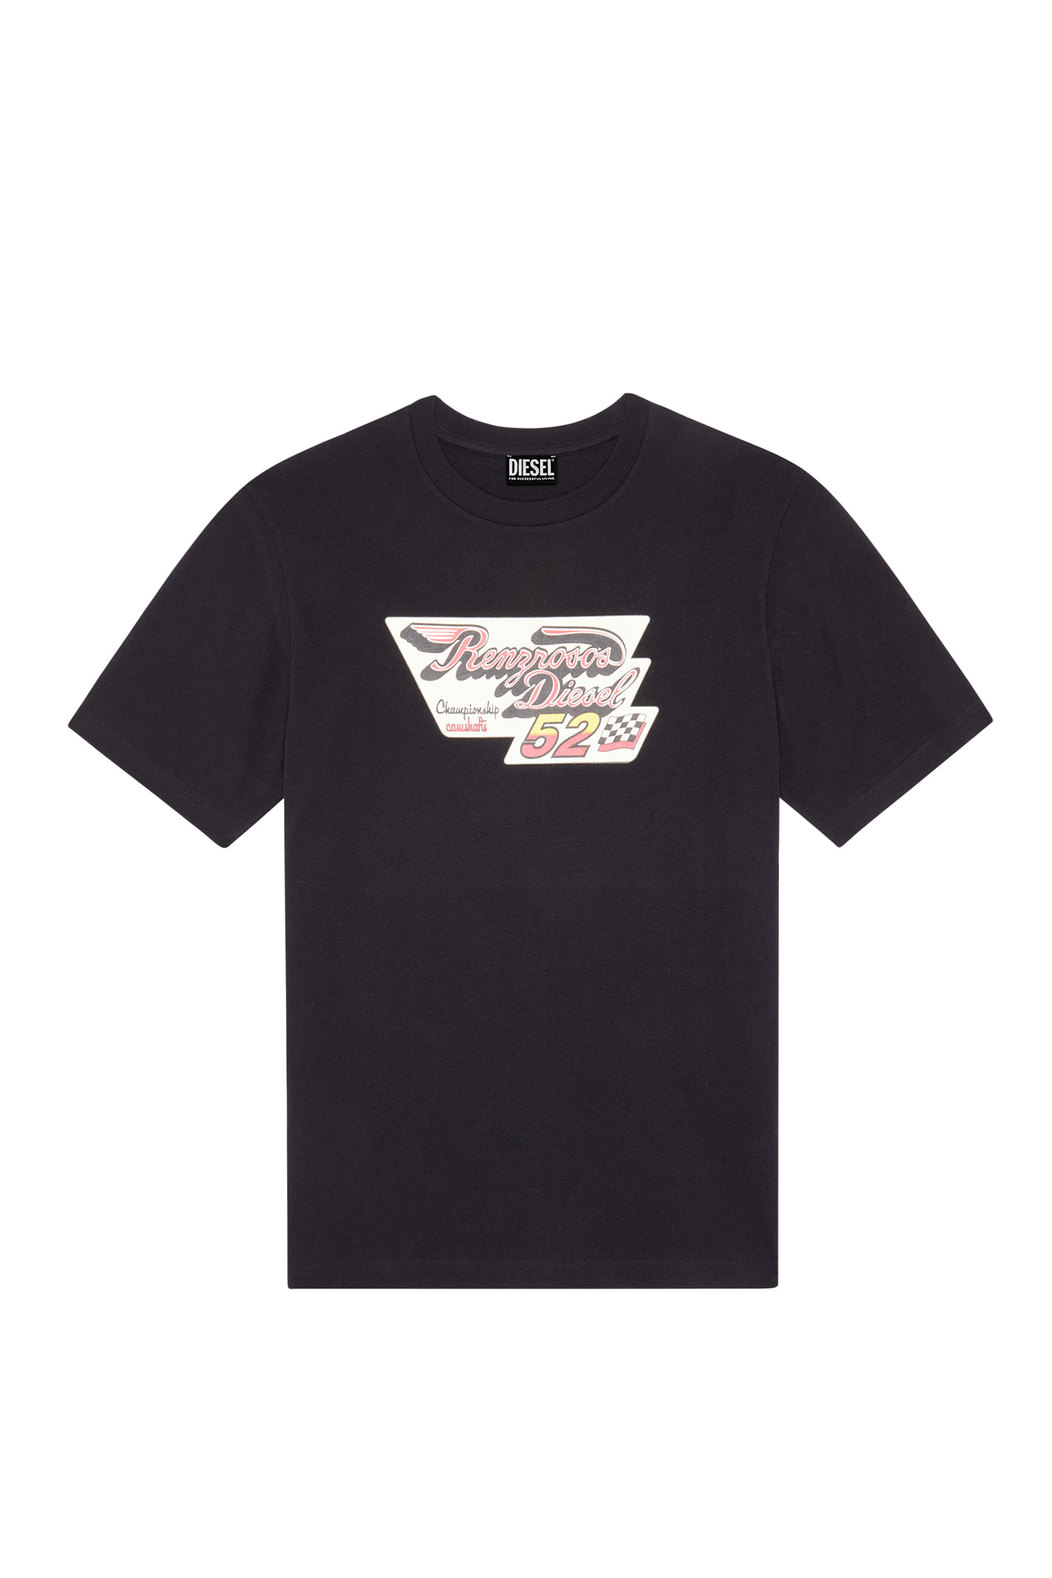 T-shirt with Diesel racing print